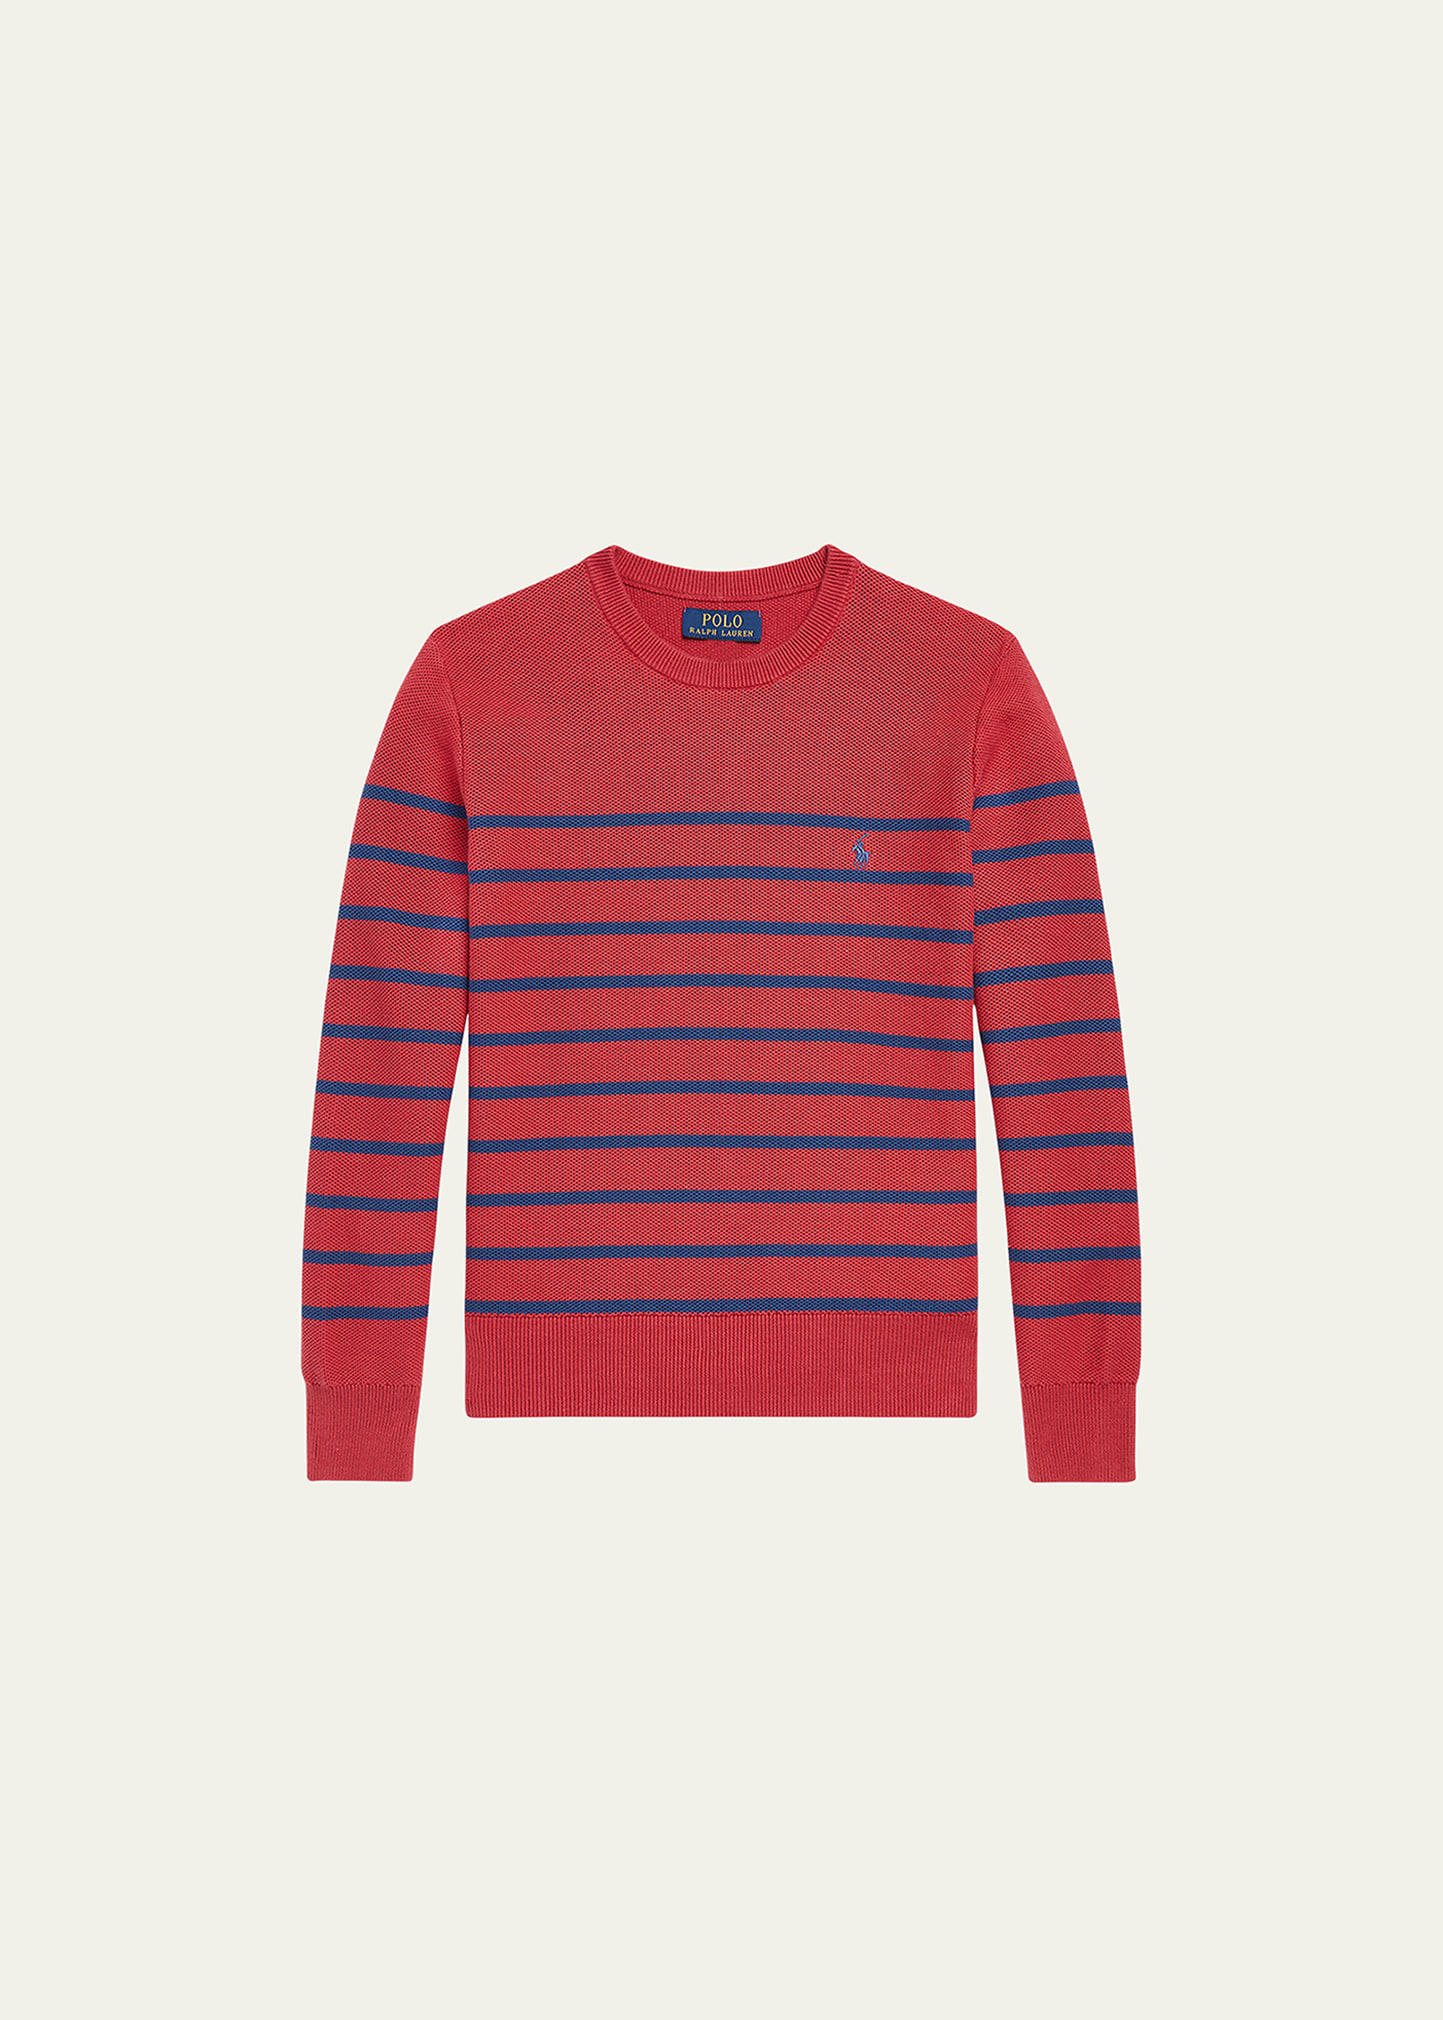 Boy's Mesh Knit Striped Sweater, Size S-XL